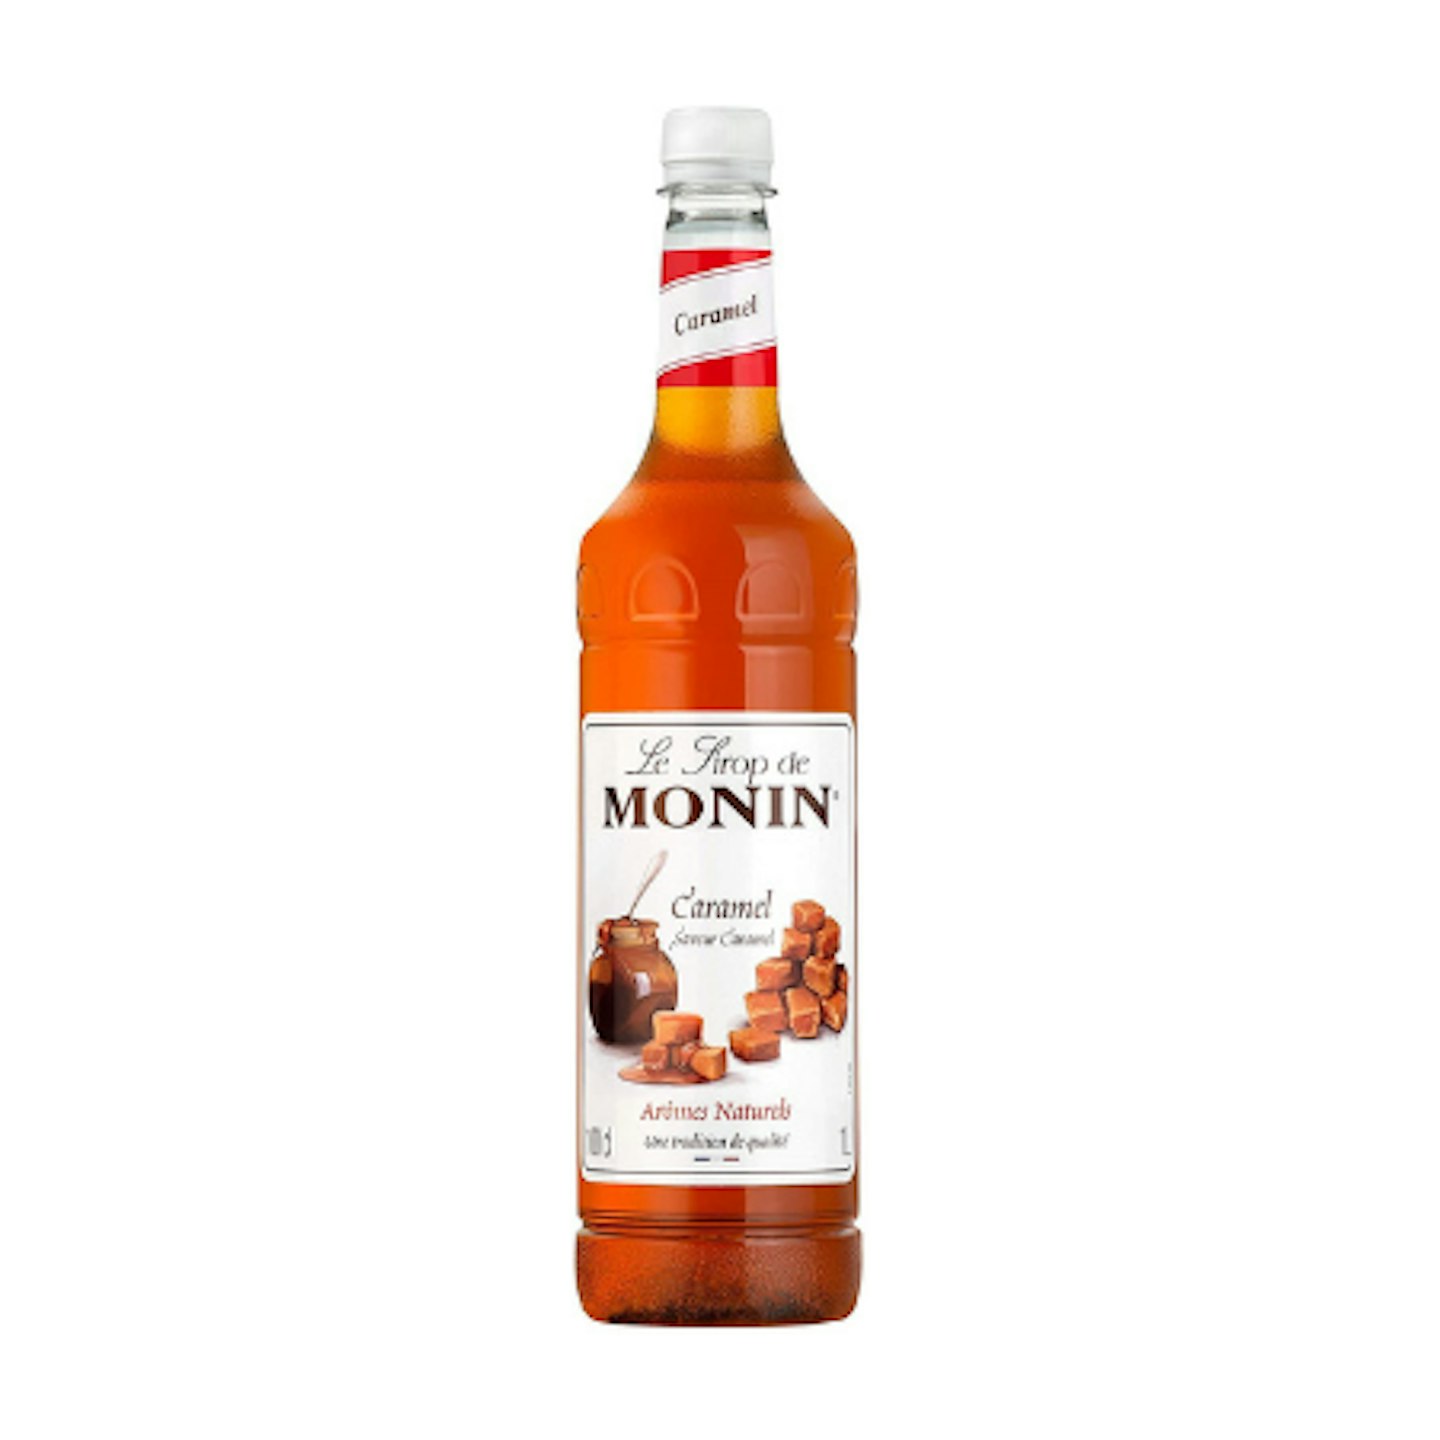 MONIN Premium Caramel Syrup